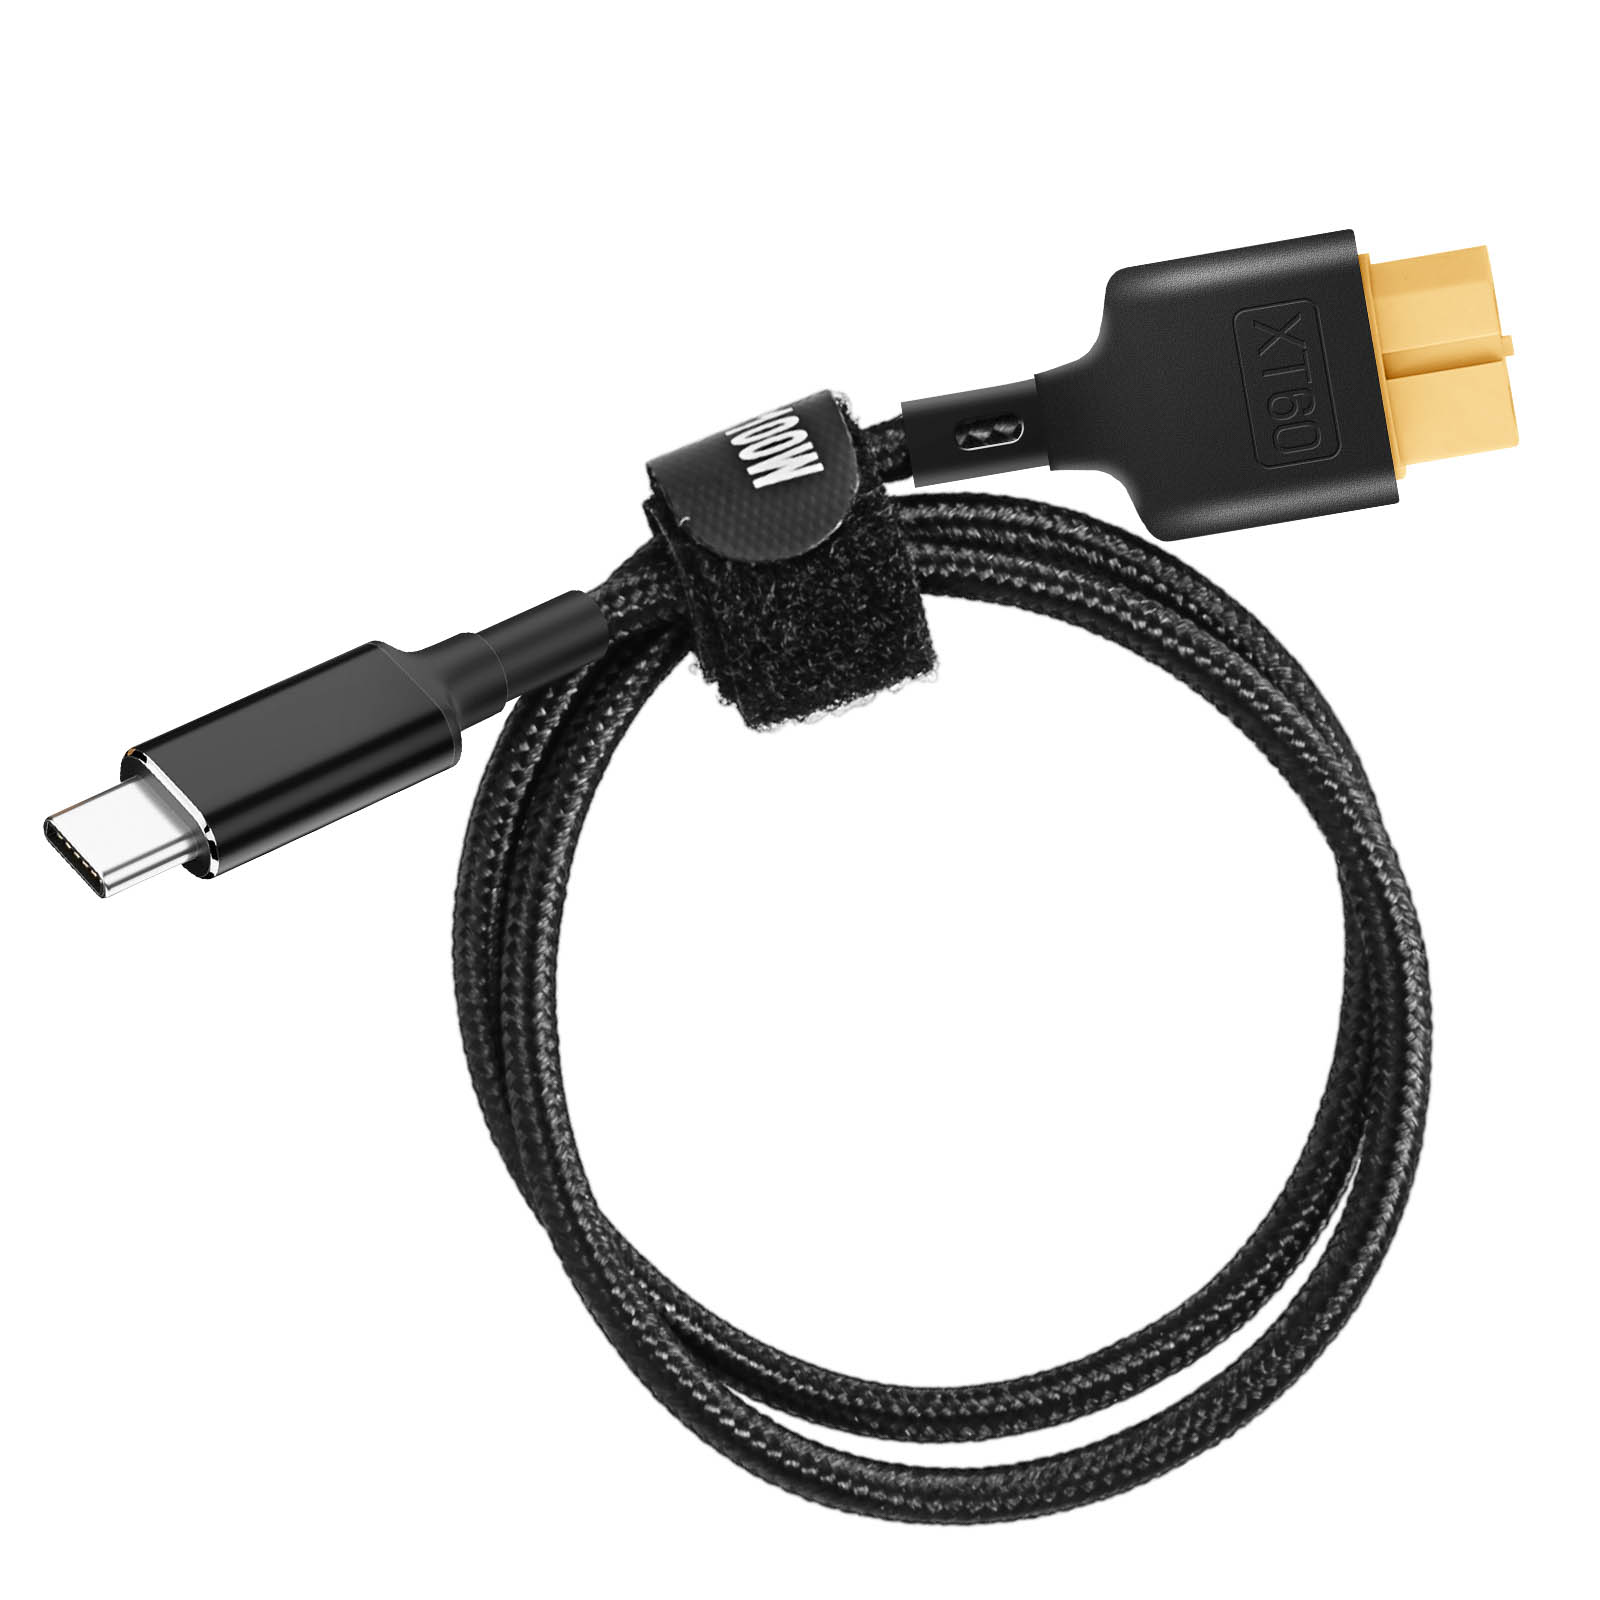 AVIZAR 50cm USB-C USB-Kabel XT60 / 100W,